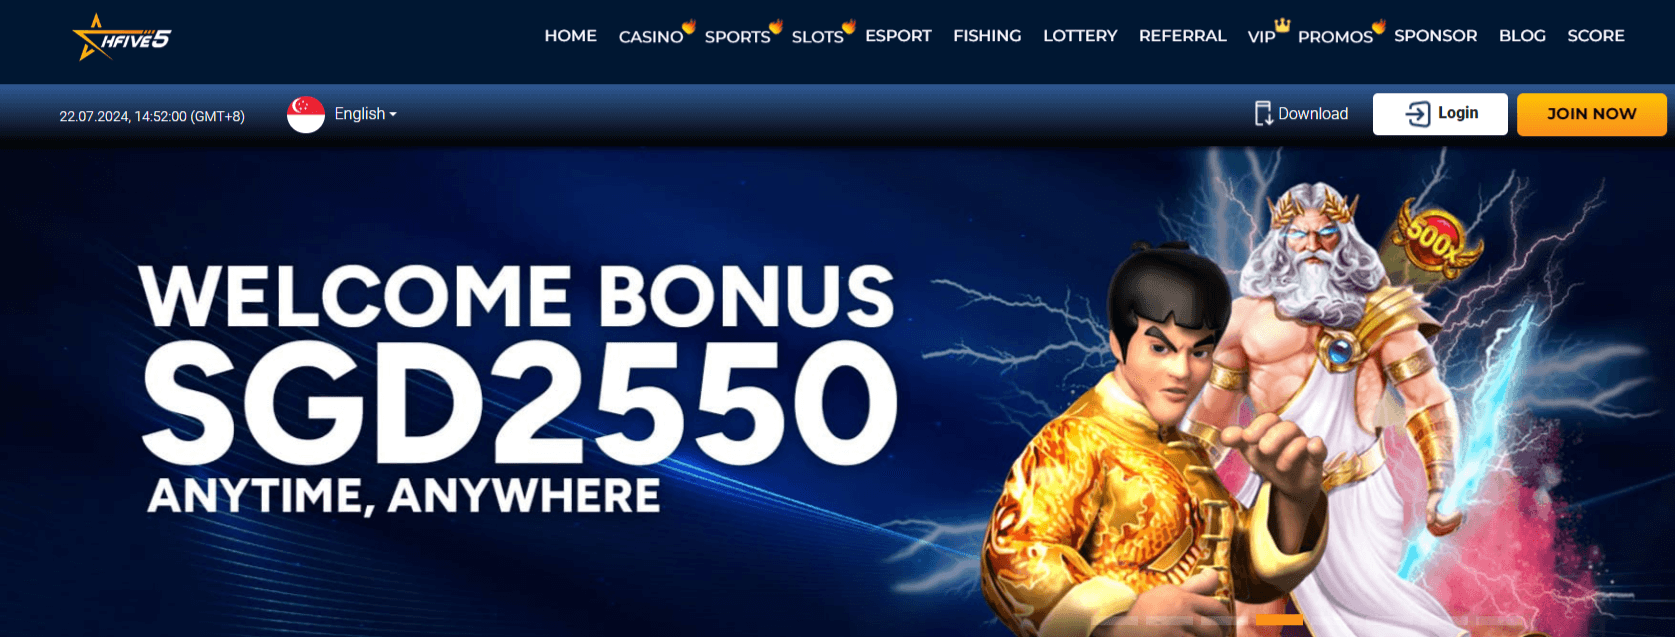 HFive5 Gambling Website